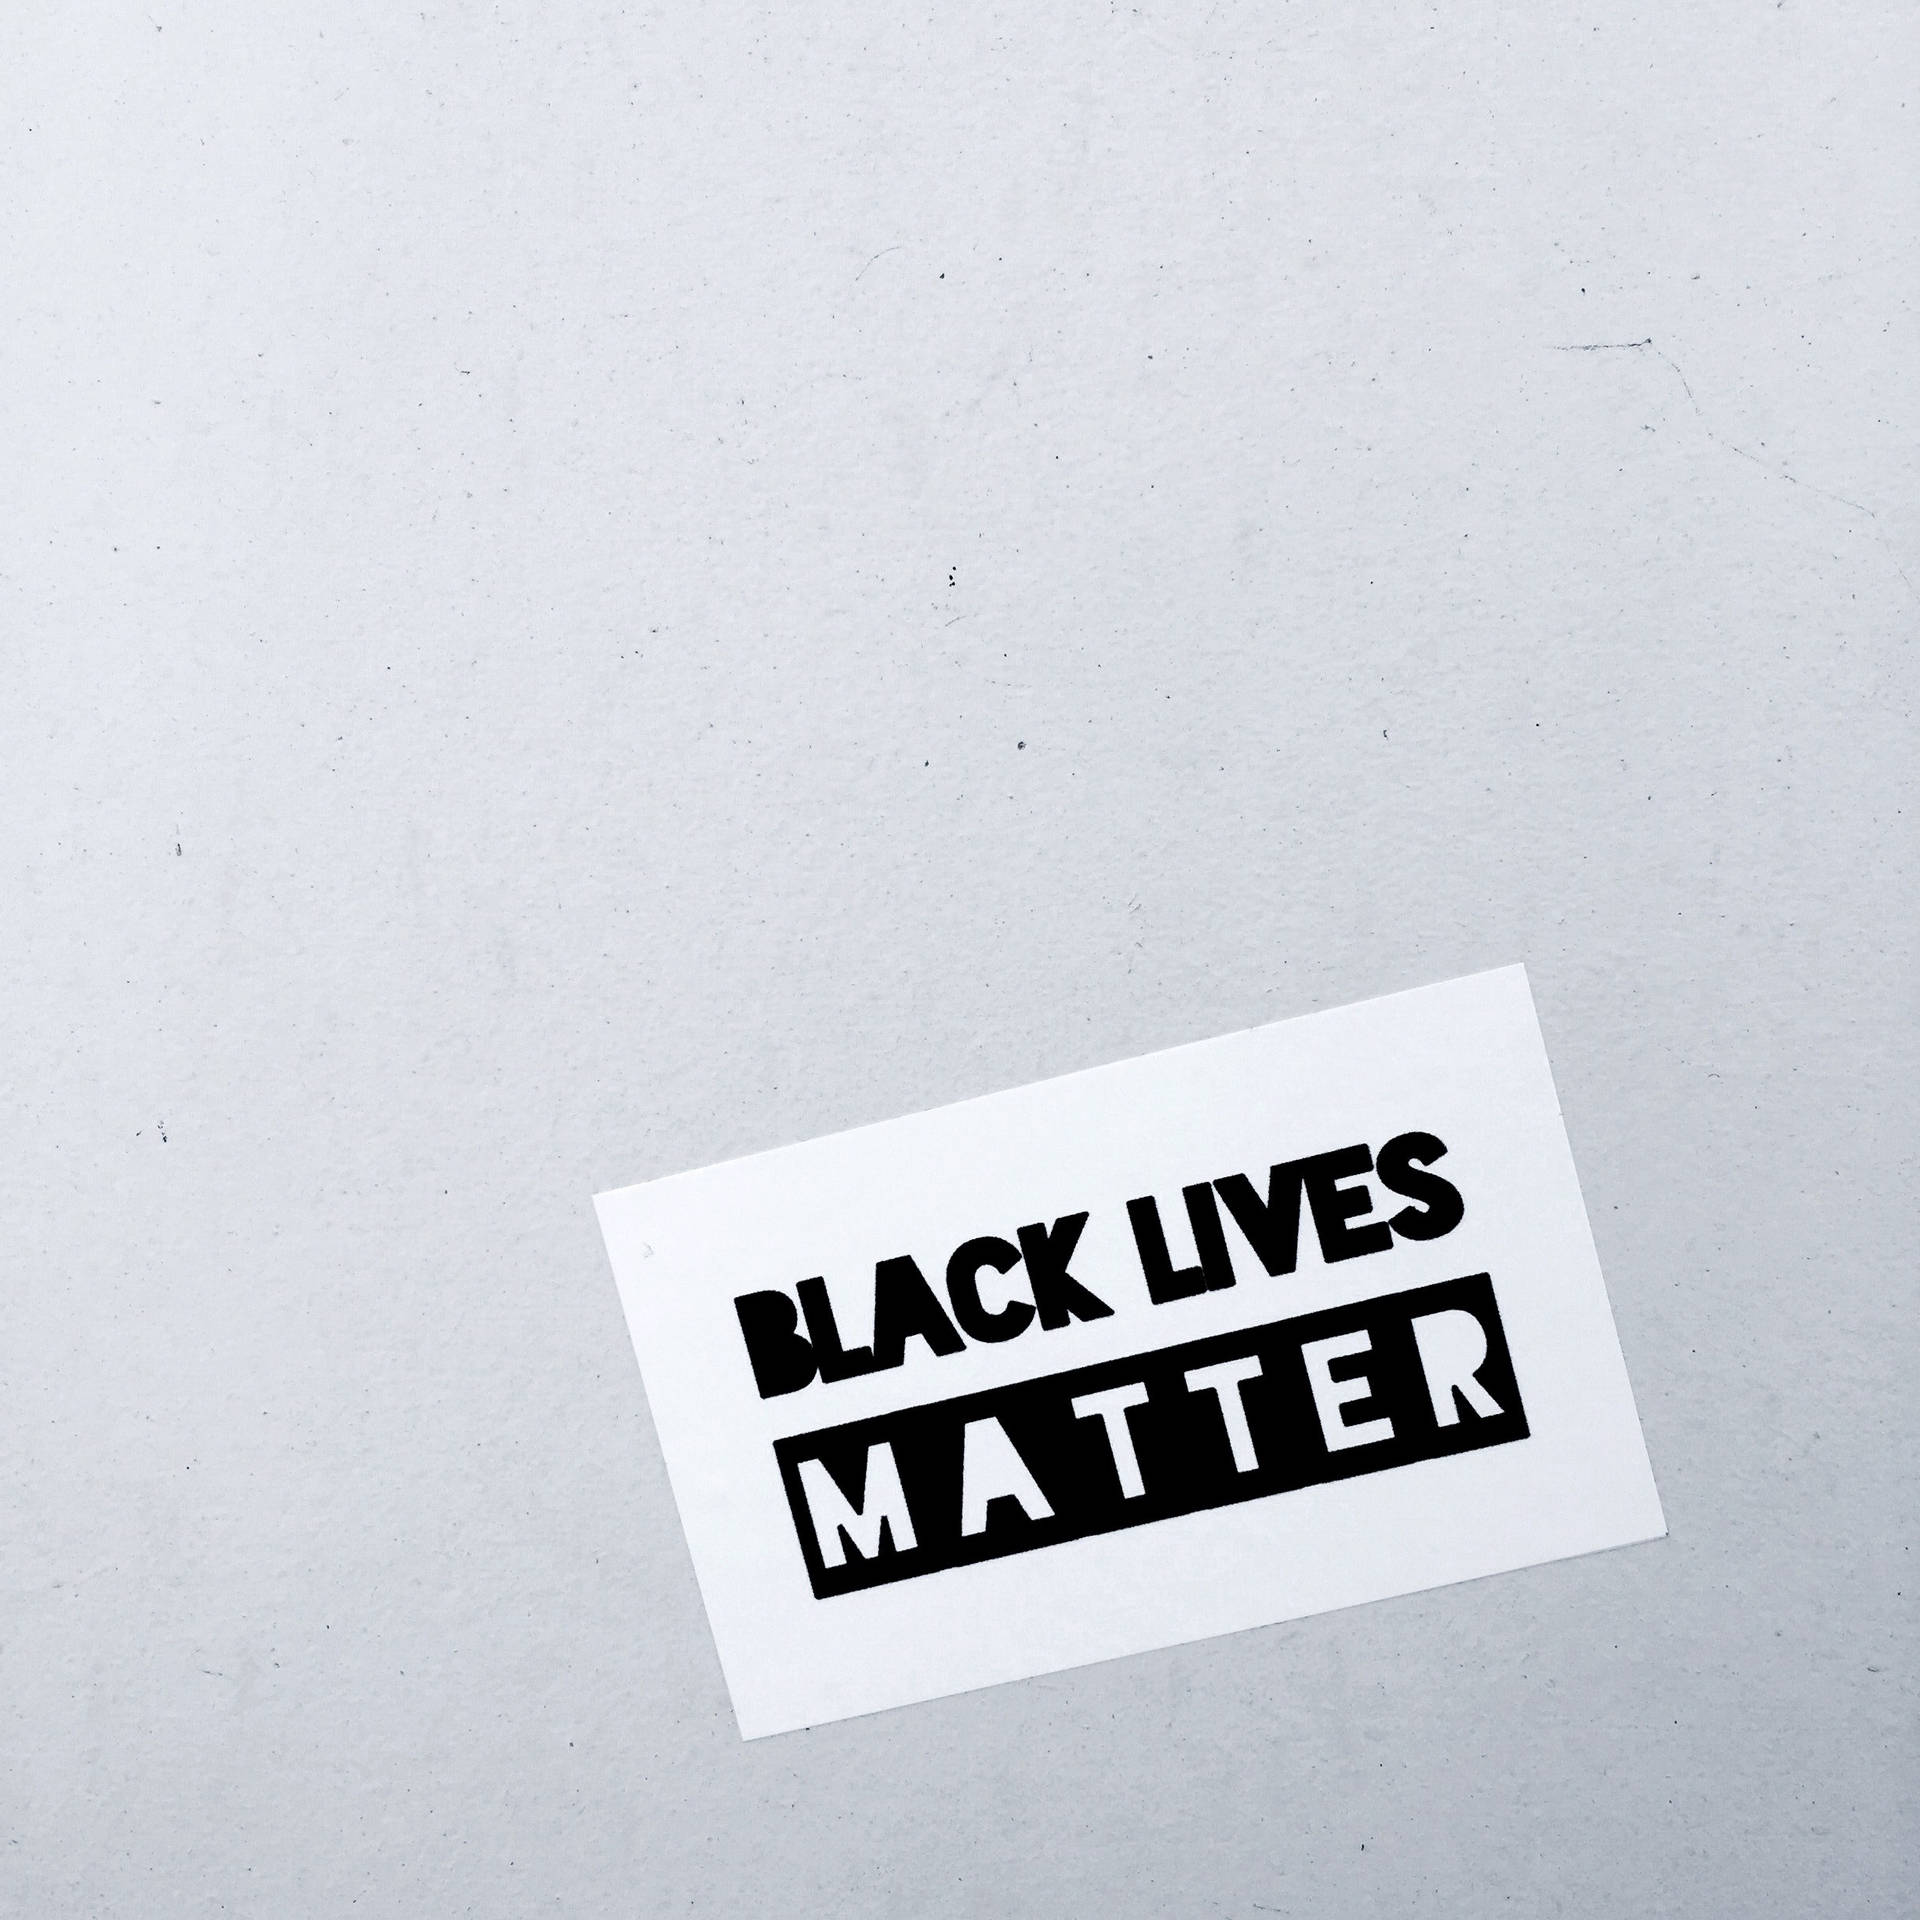 Black Lives Matter Sticker On Wall Background